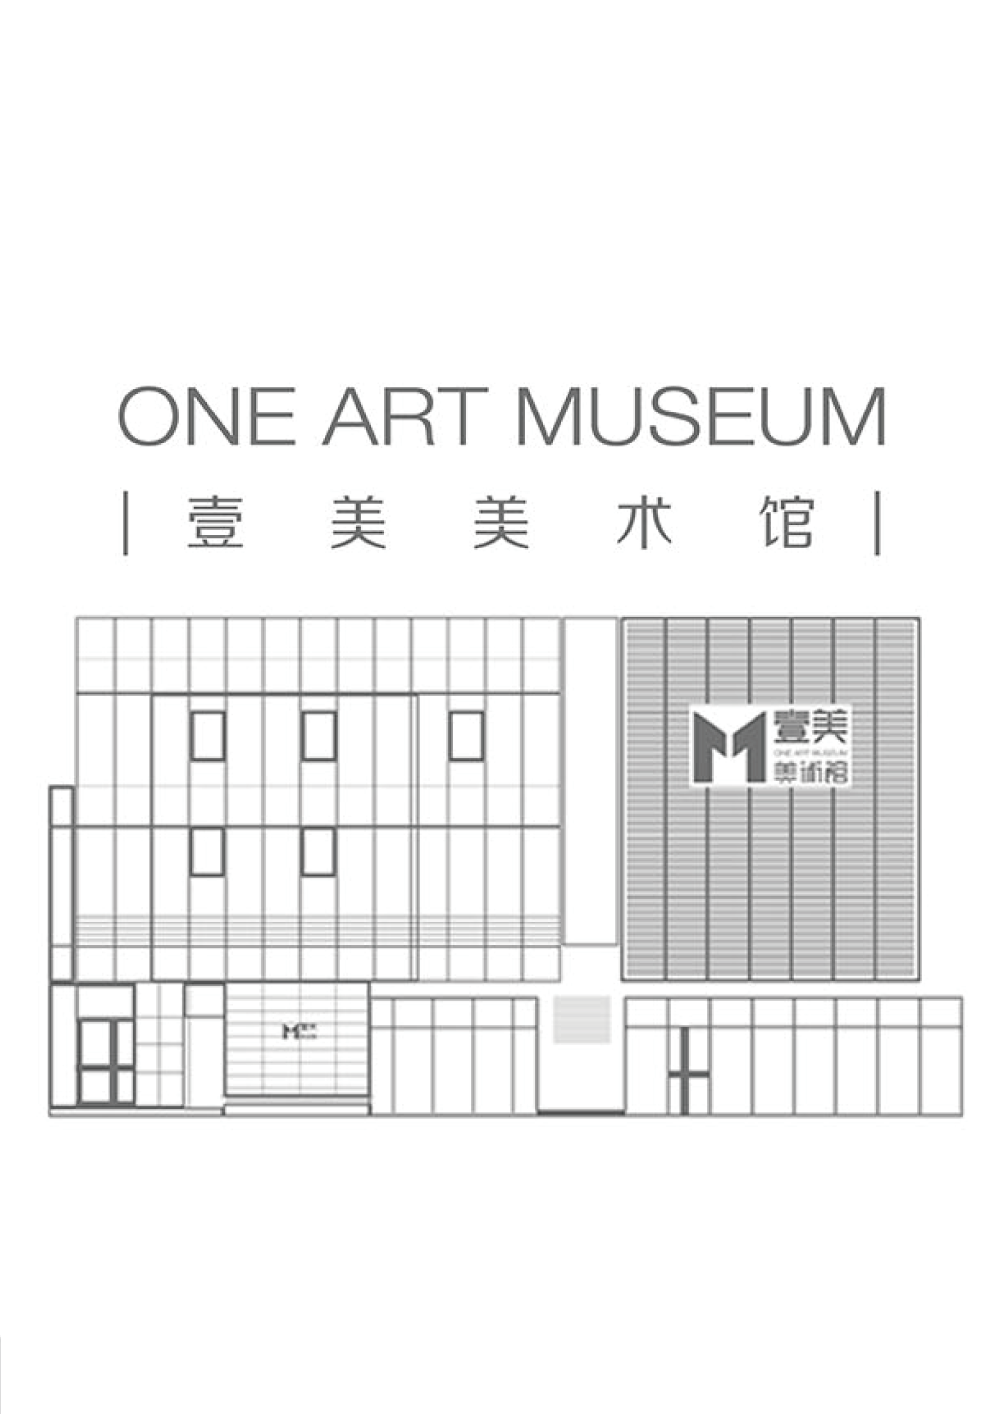 关于美术馆 About Museum